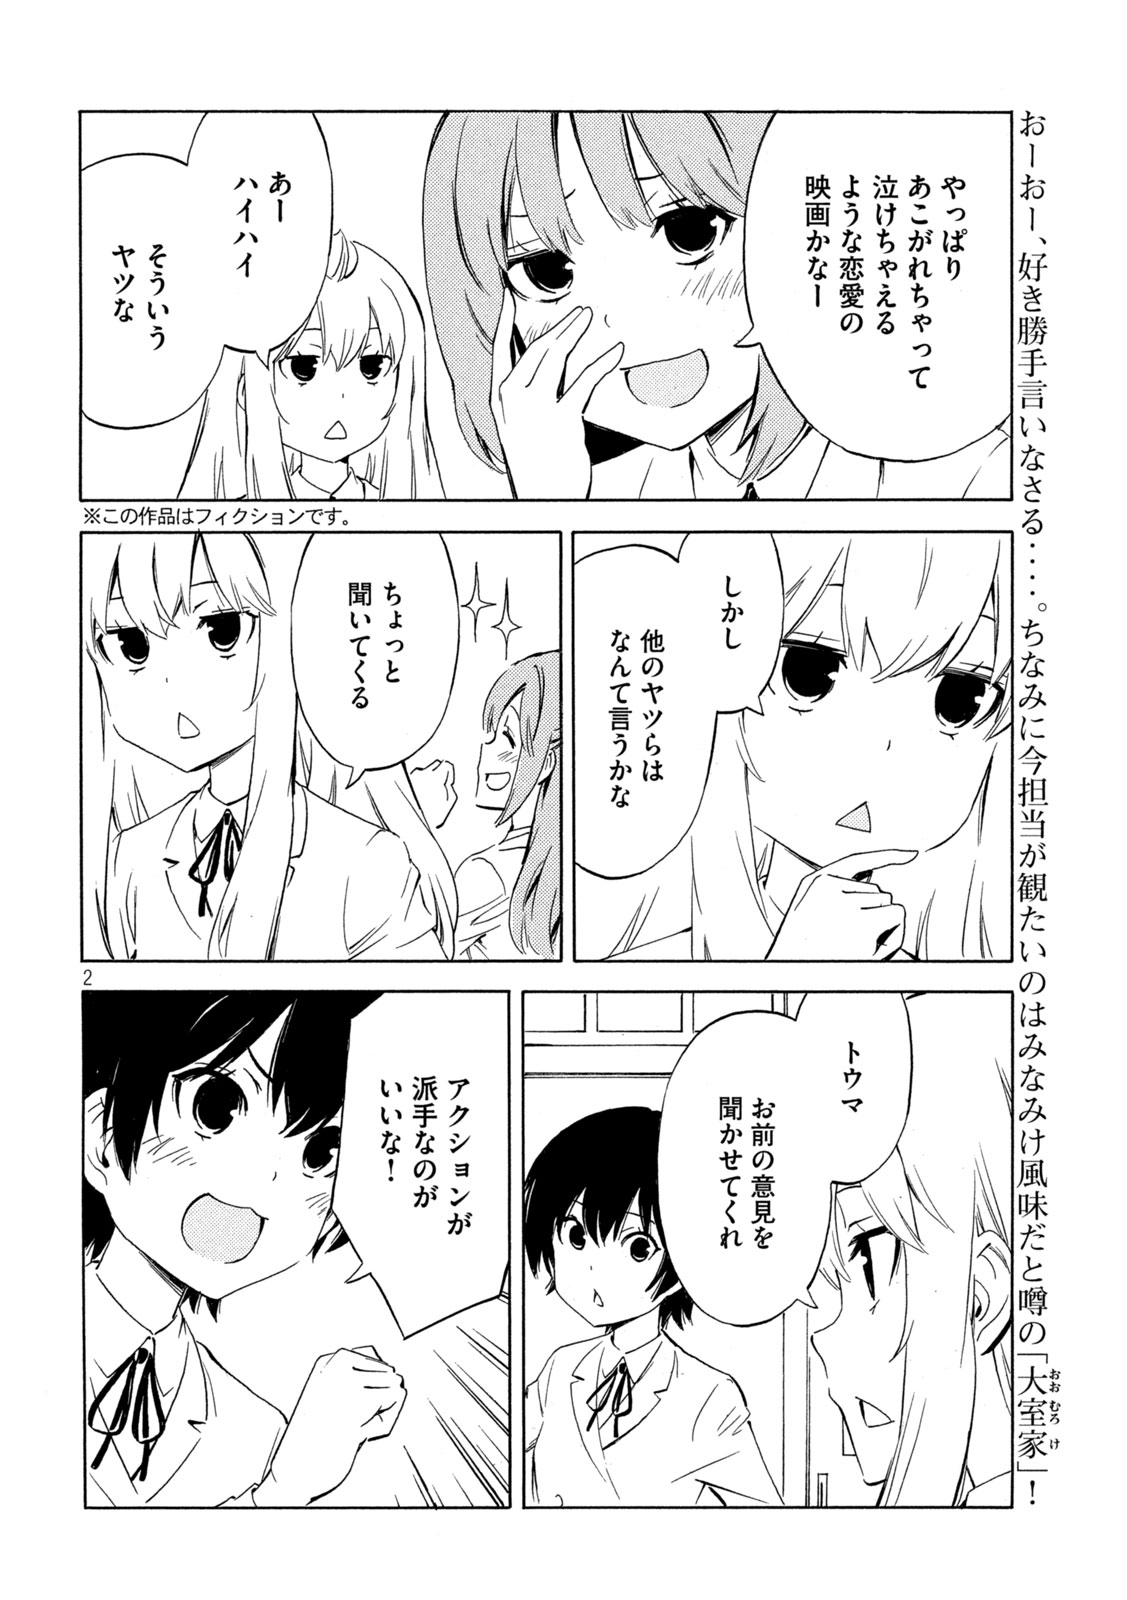 Minami-ke - Chapter 479 - Page 2